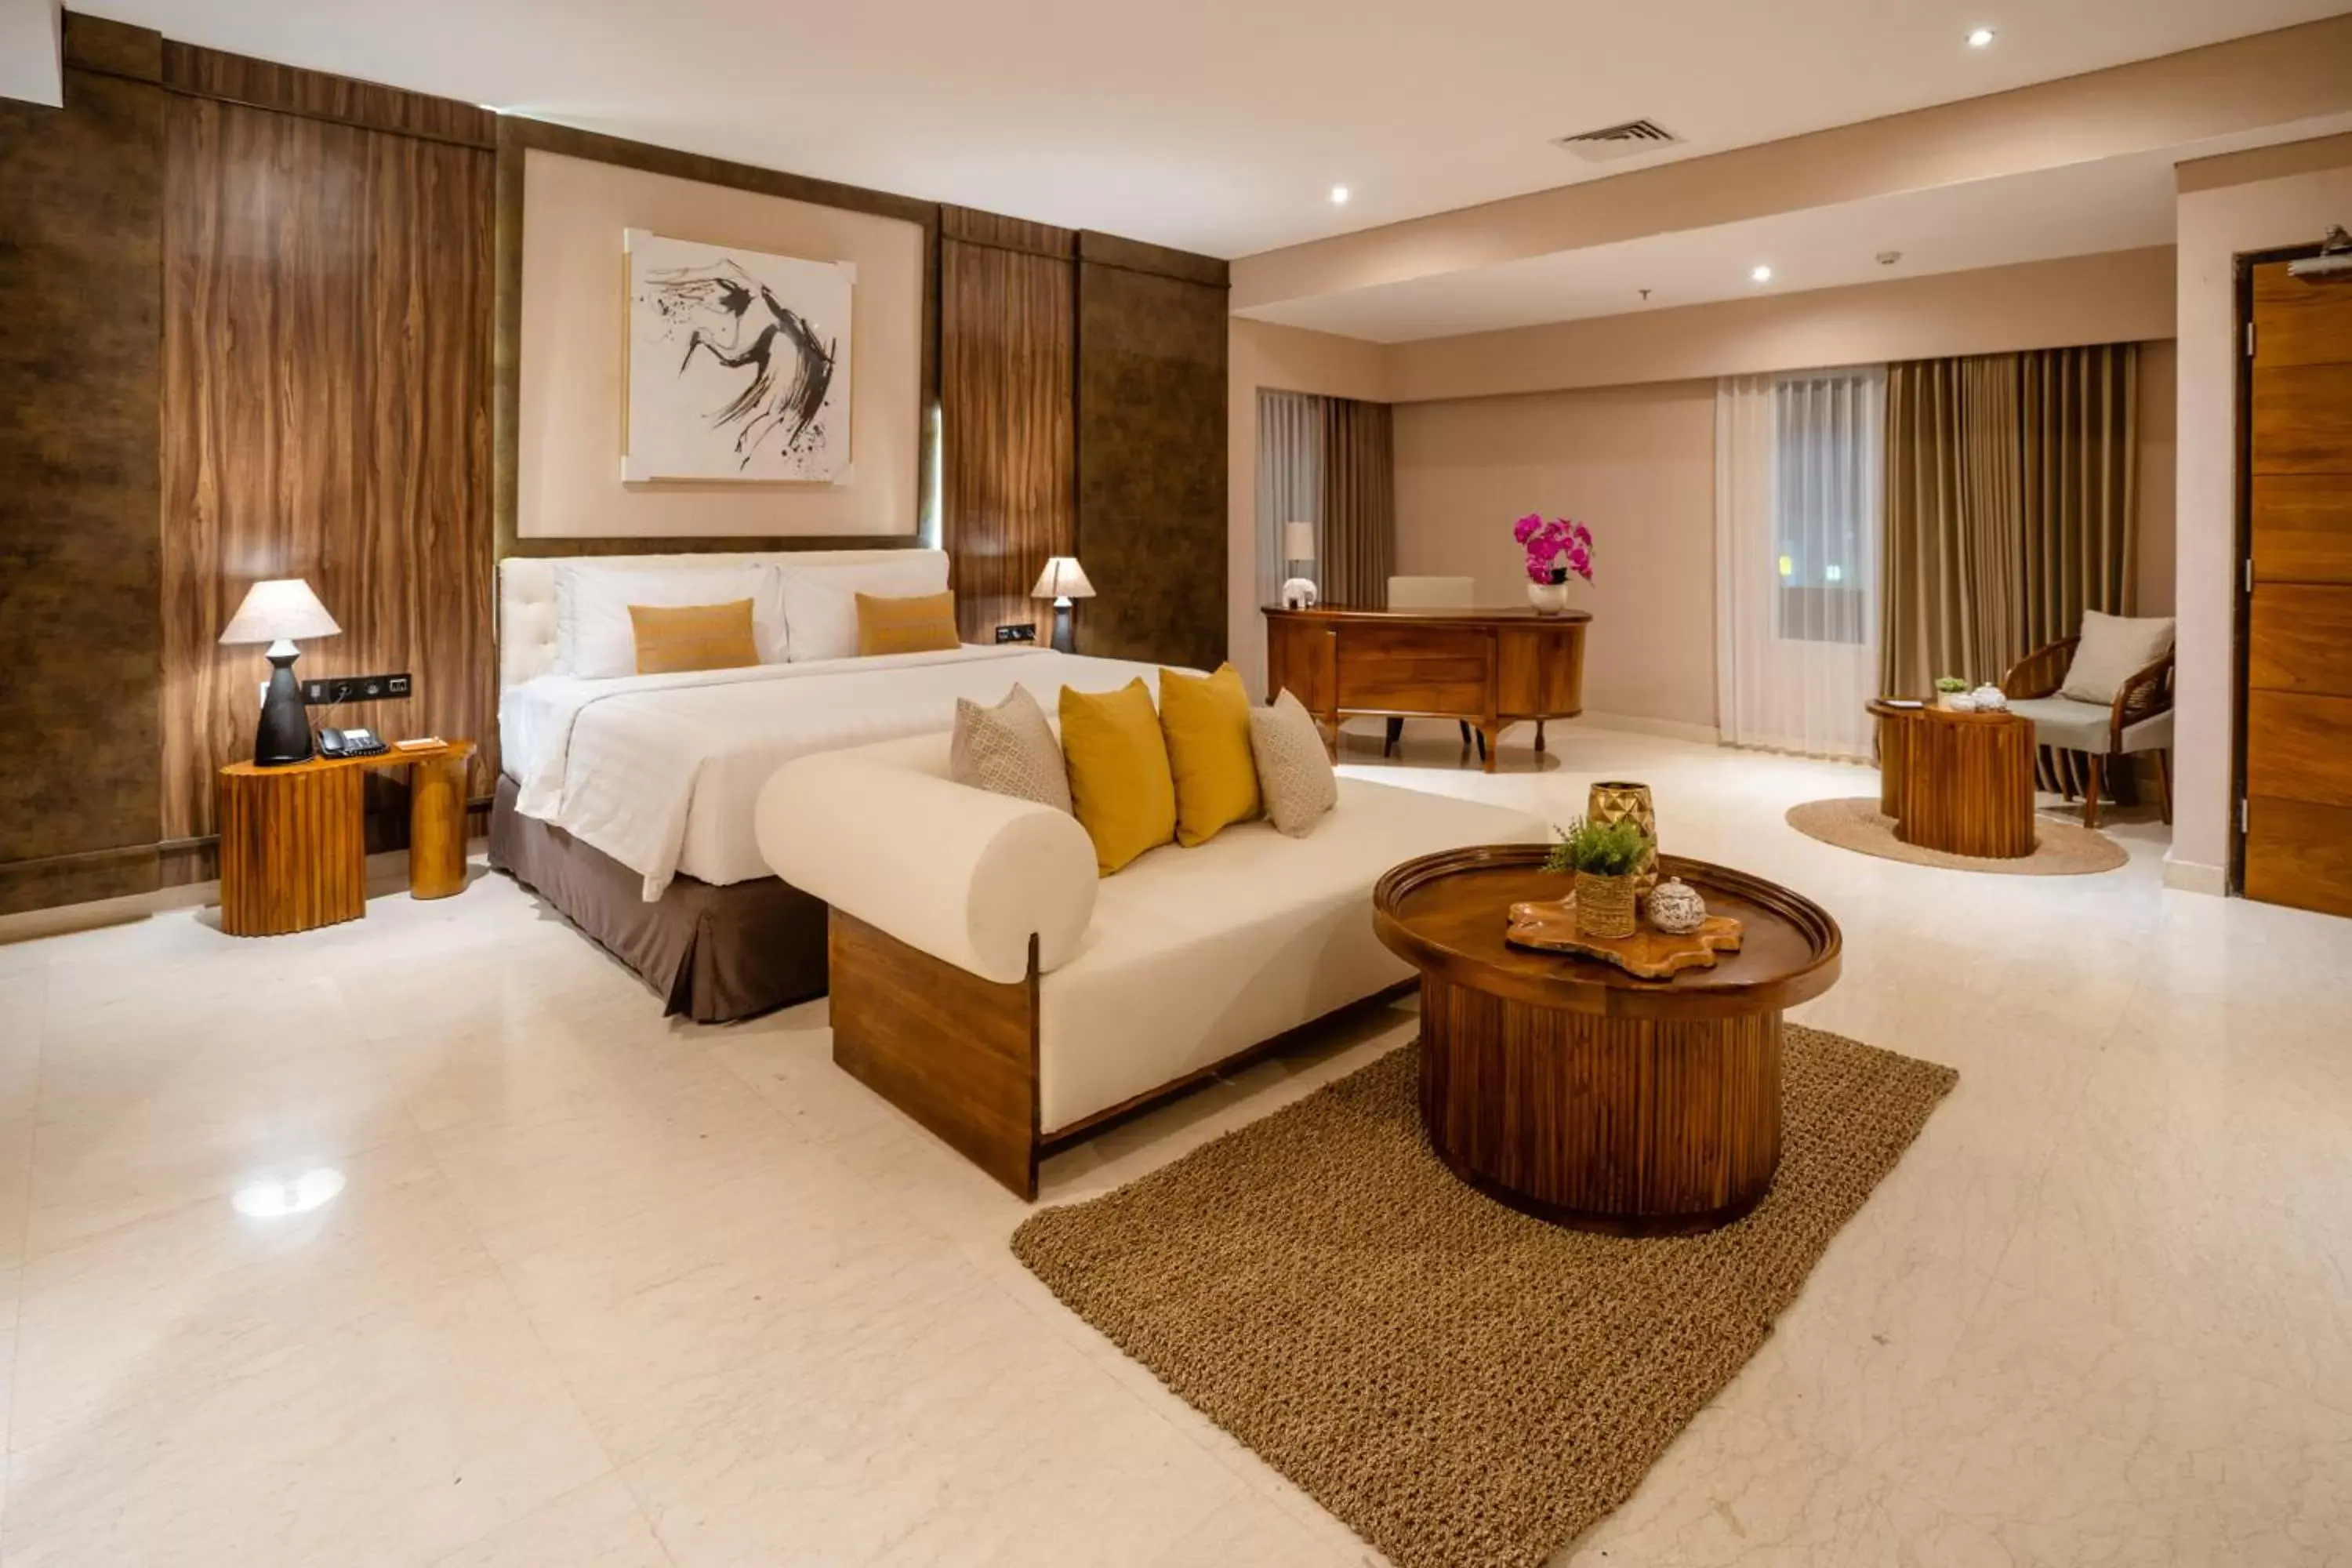 Bedroom in Crystalkuta Hotel - Bali